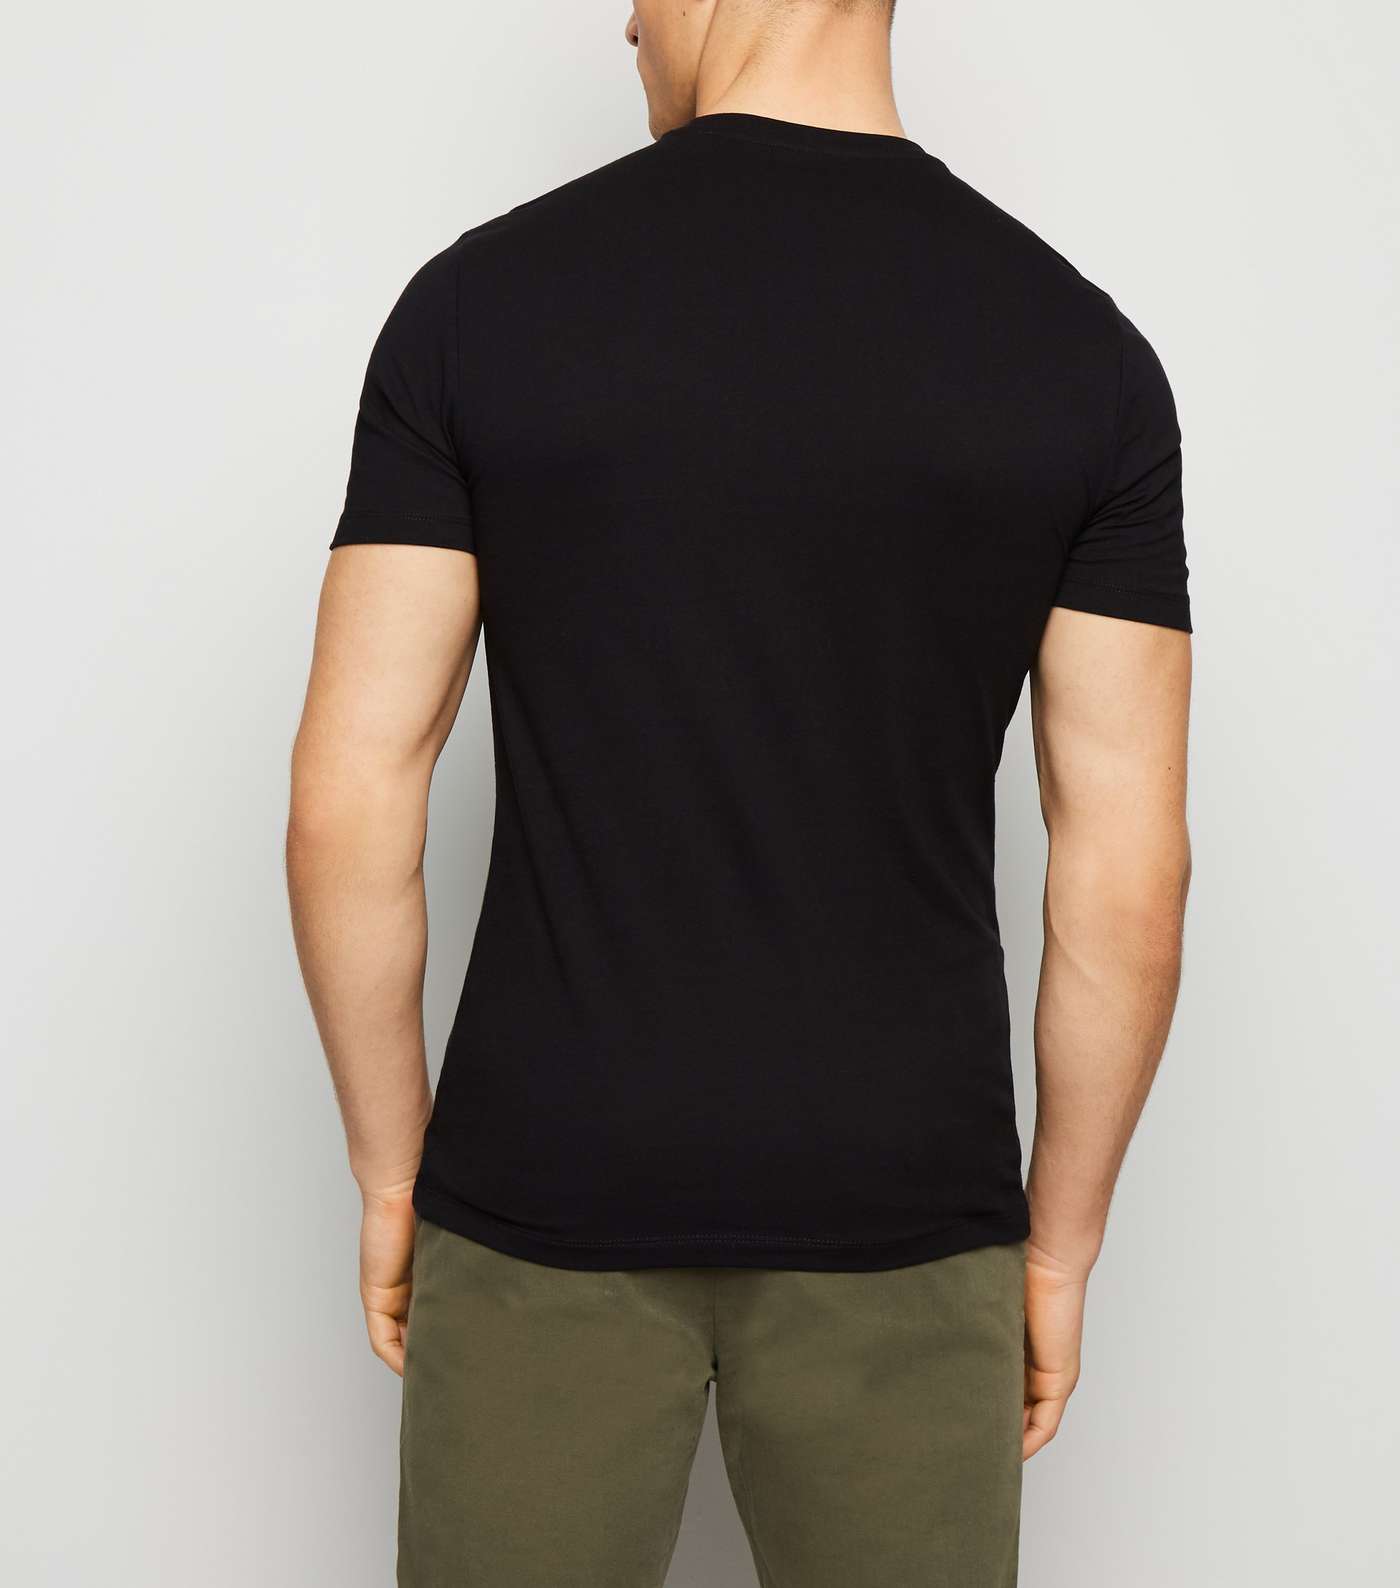 Black Muscle Fit T-Shirt Image 3